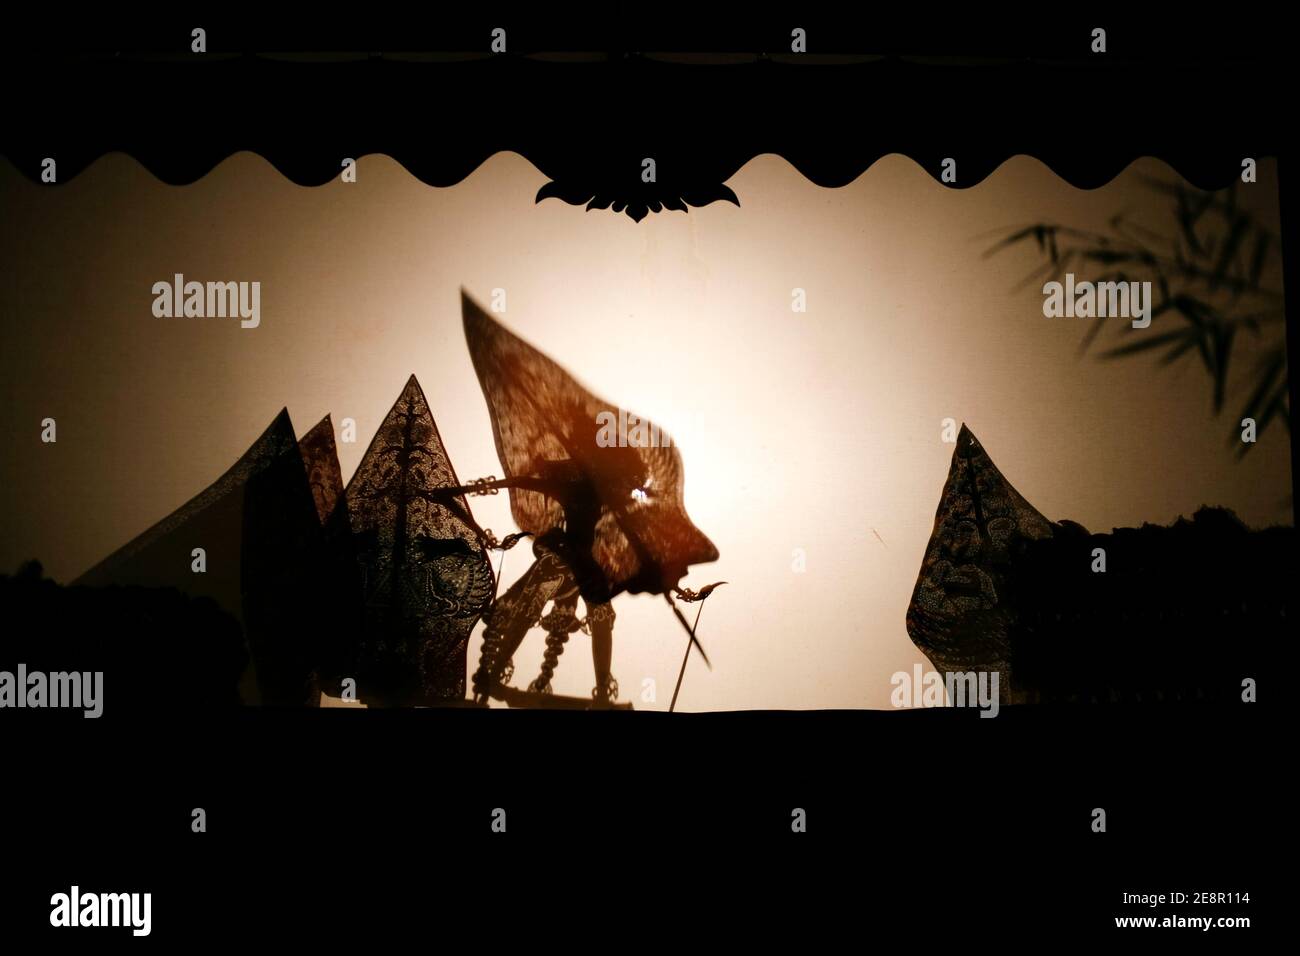 Indonesian puppet called wayang kulit performing on screen at night Stock Photo